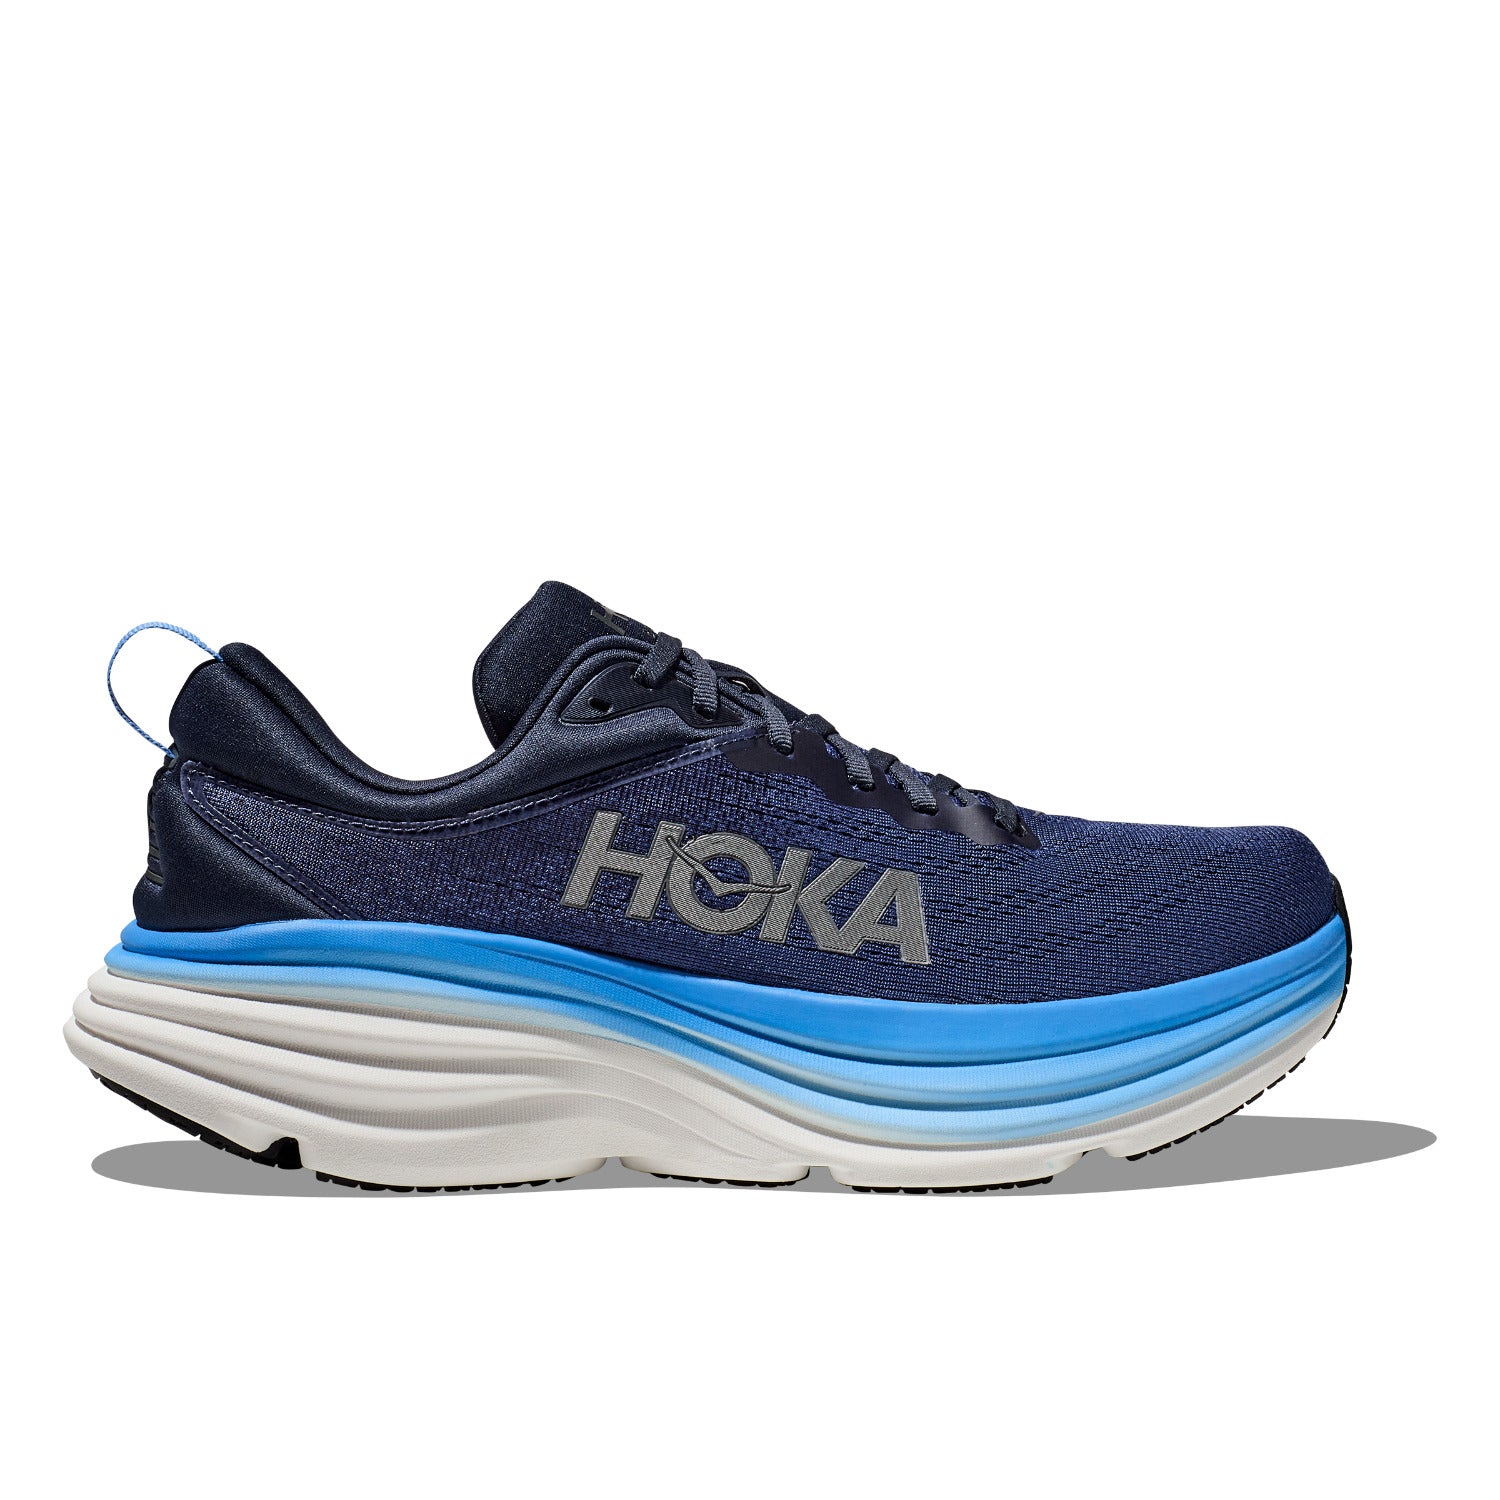 hoka bondi sr Buy HOKA ONE ONE Women s Running Shoes at Ubuy